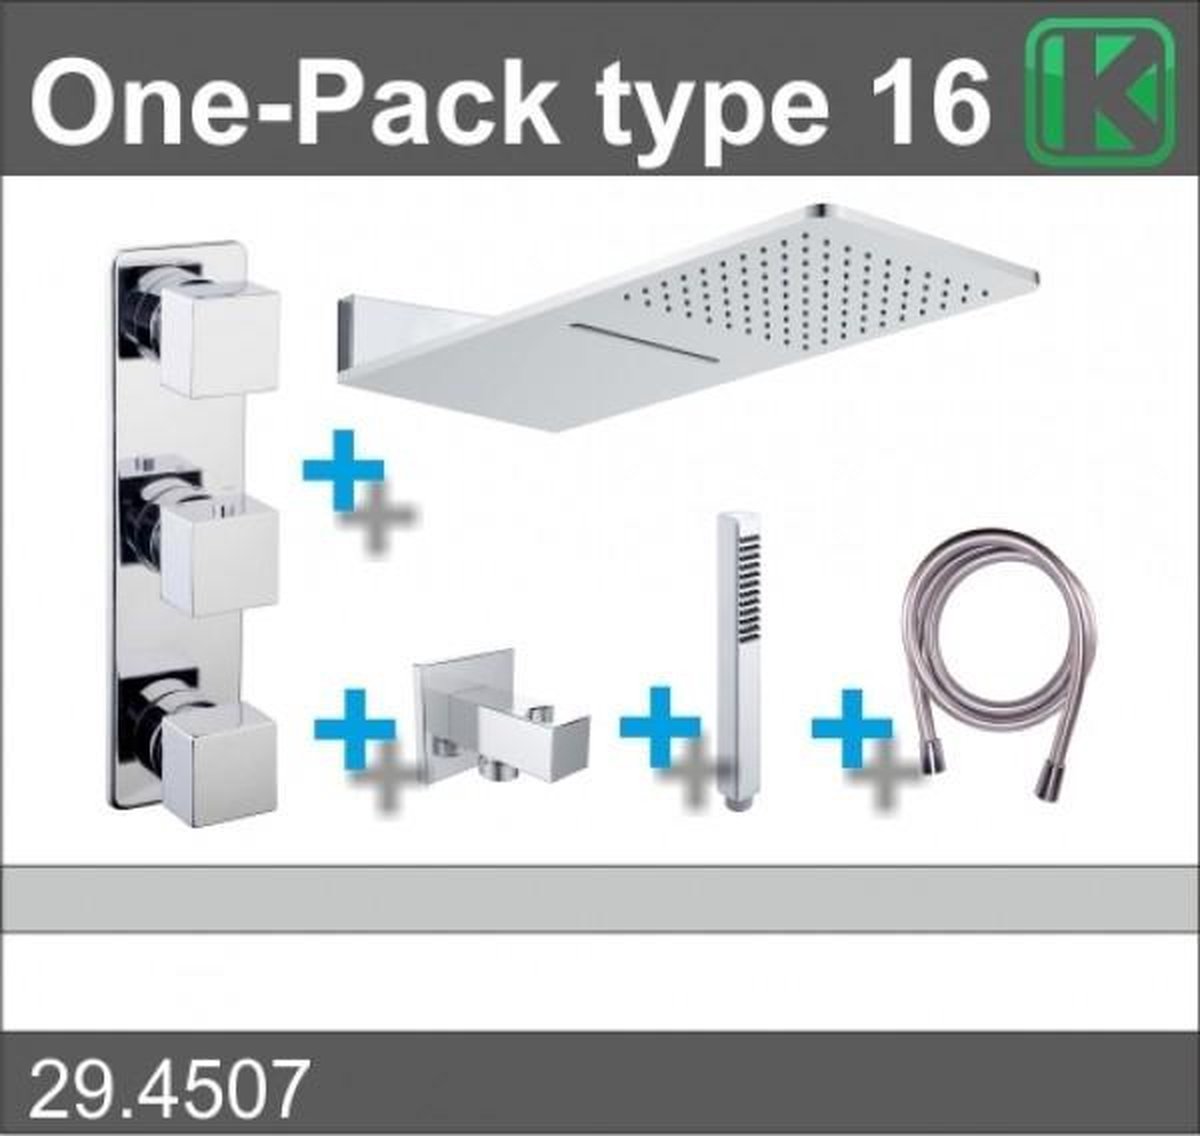 Xellanz One Pack inbouwthermostaatset type 16 24x55 29.4507